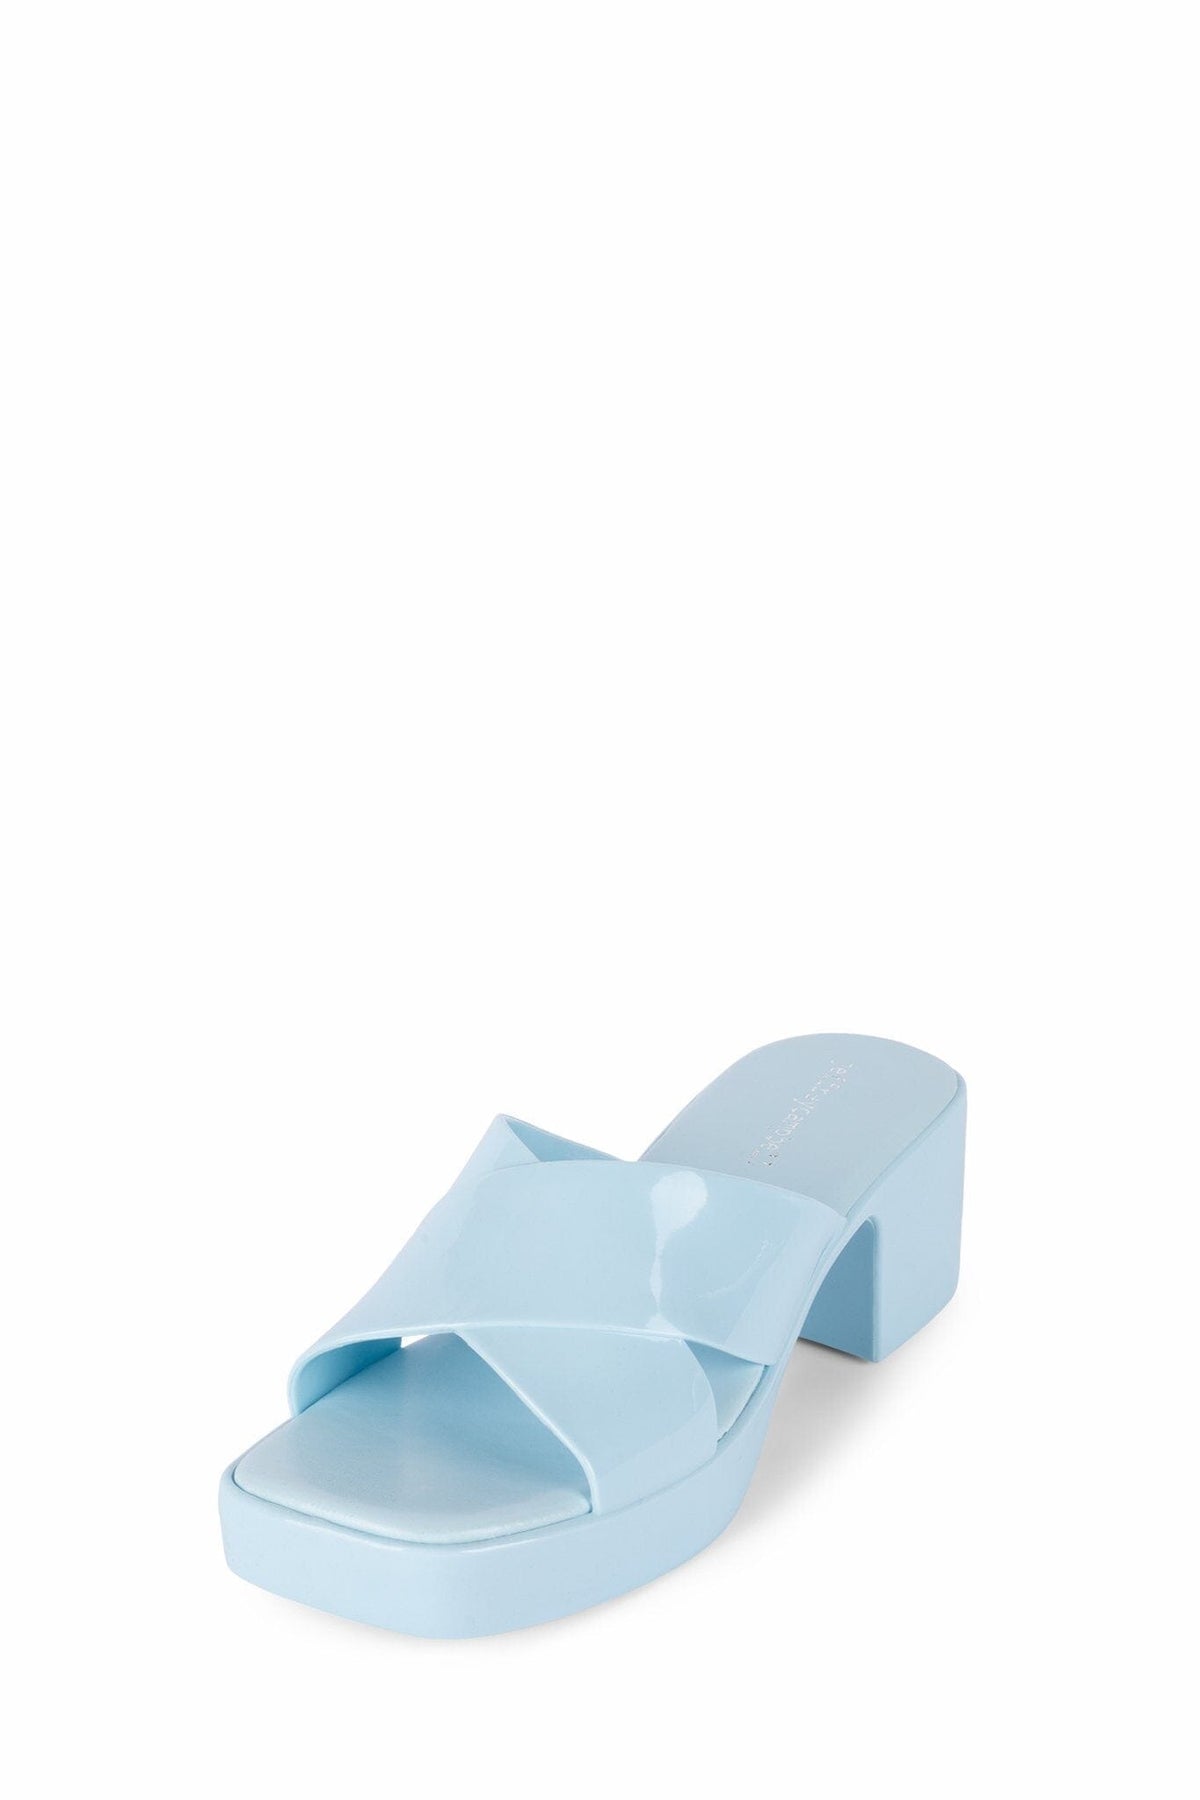 BUBBLEGUM Jeffrey Campbell Jelly Platform Sandals Baby Blue Shiny